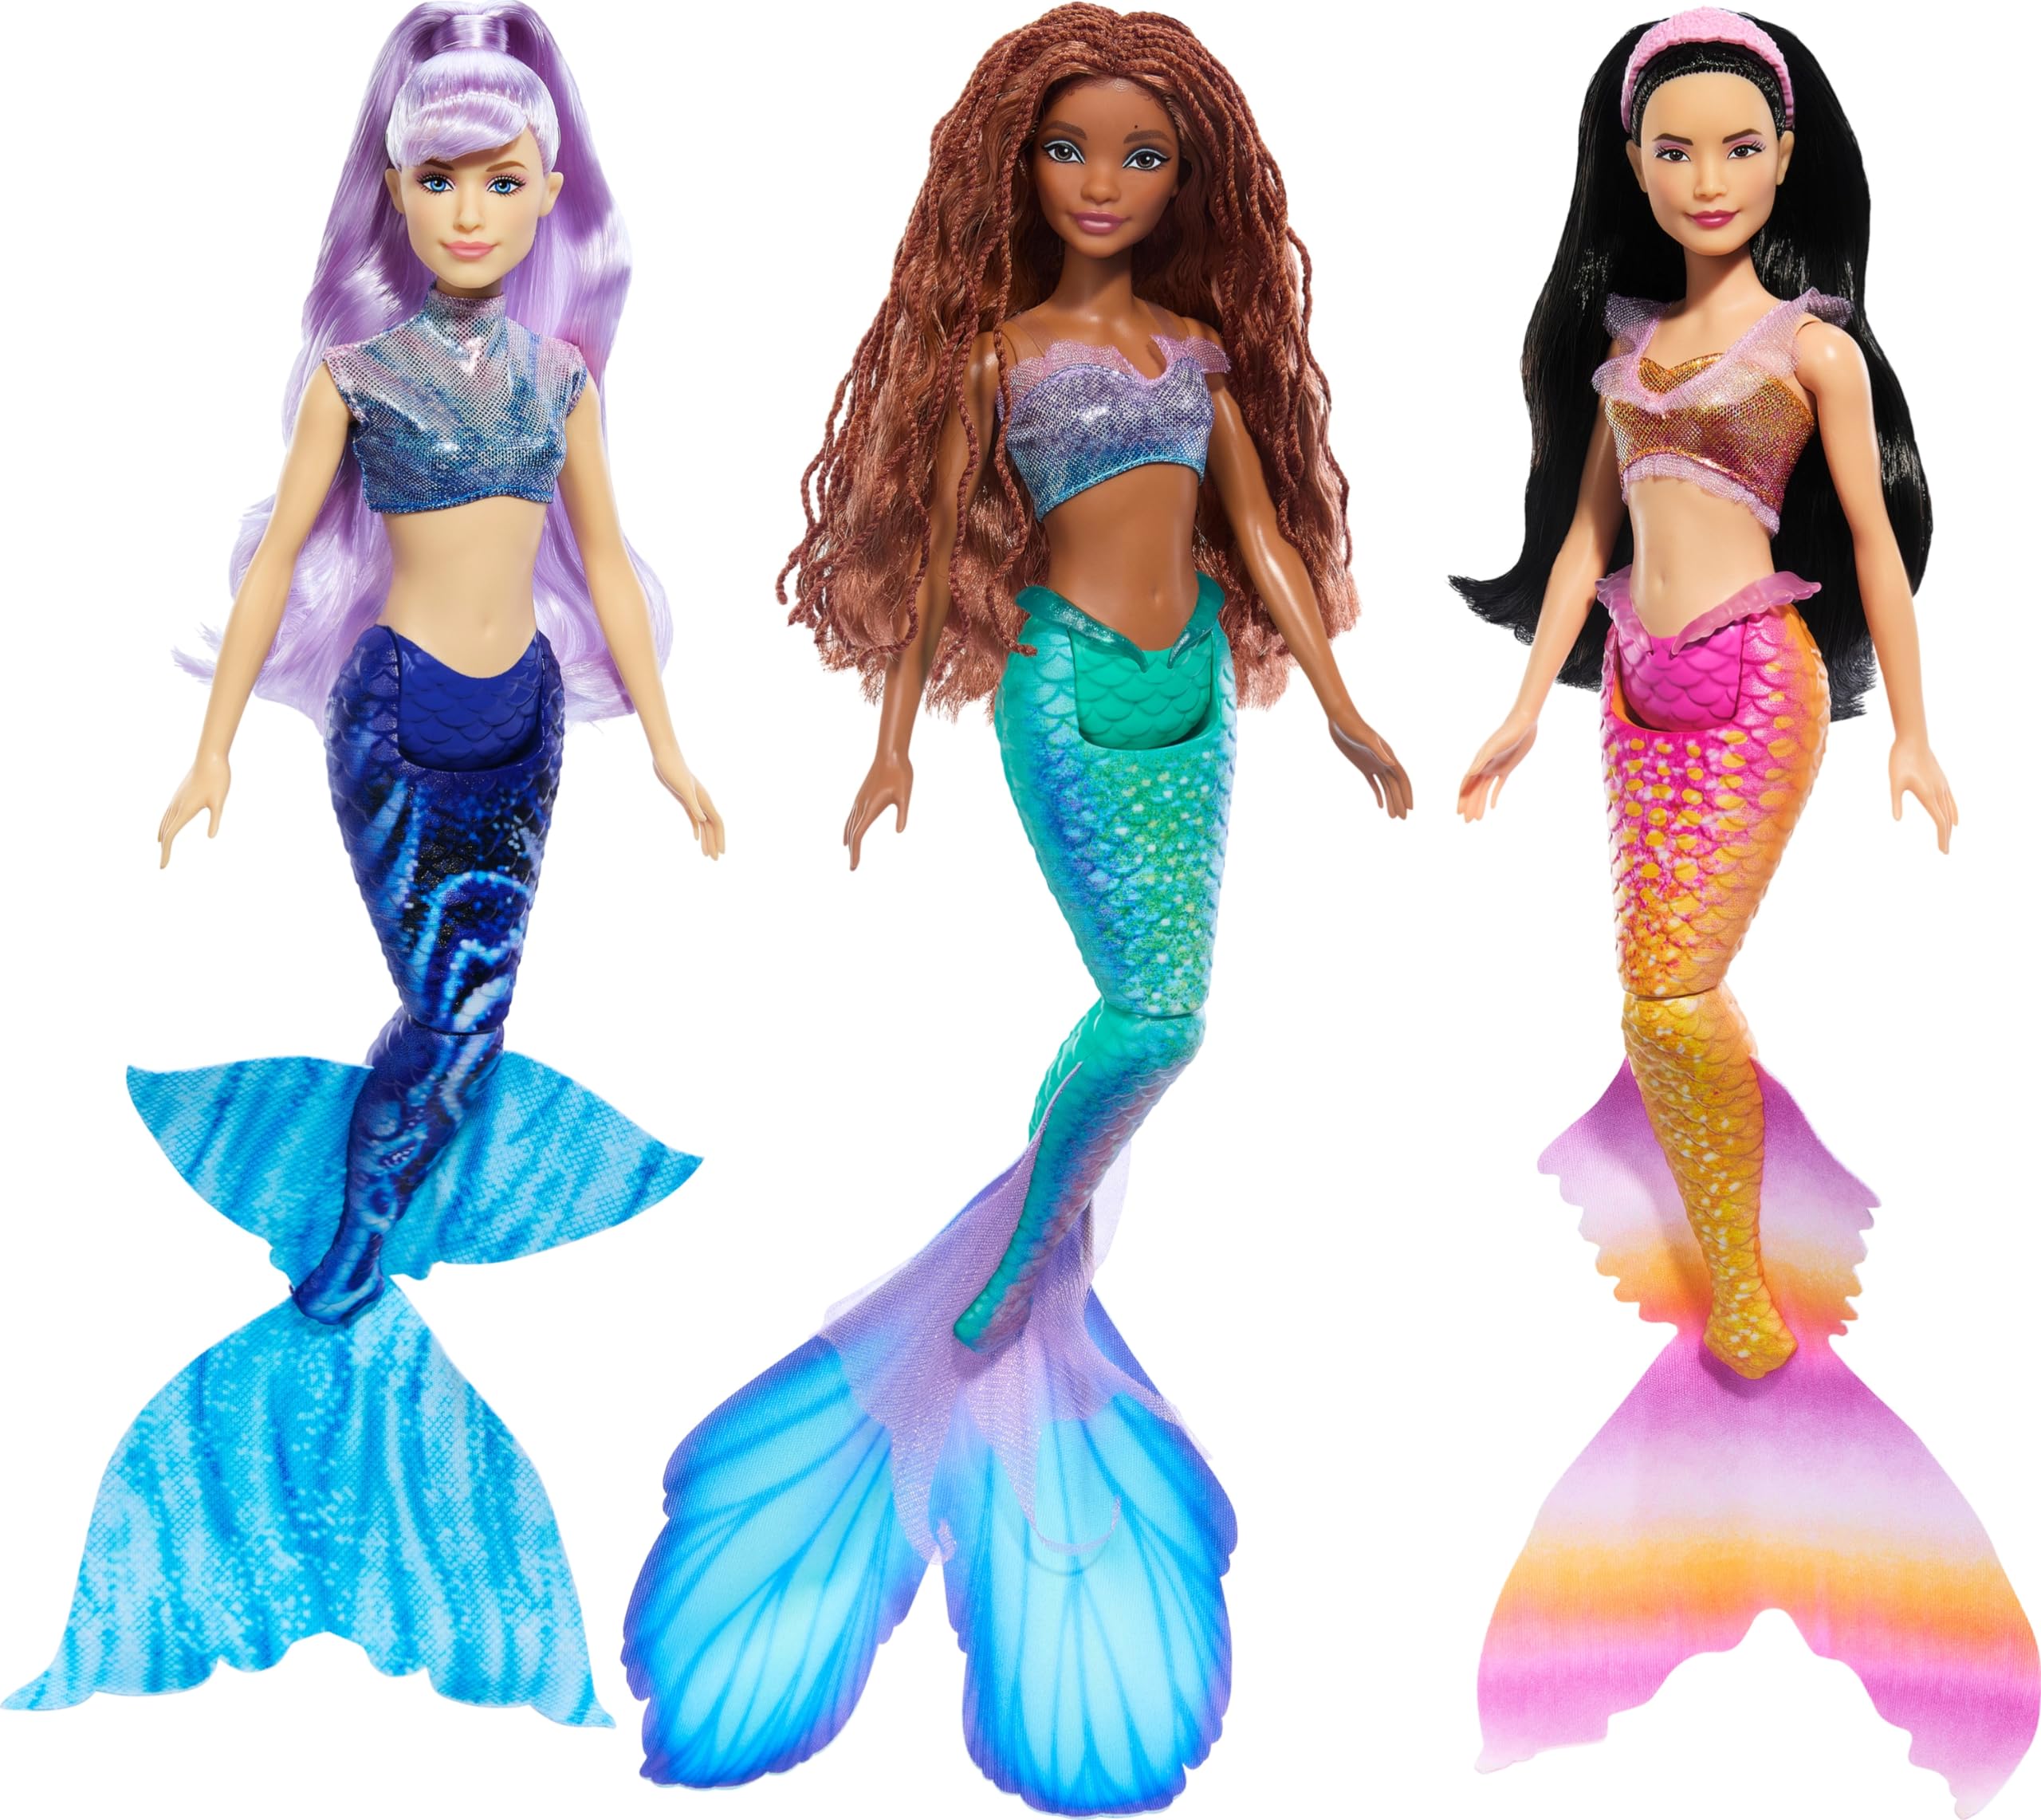 Mattel Disney The Little Mermaid Ariel Sisters Doll Set with 3 Fashion Mermaid Dolls, Includes Mala, Karina, and Ariel